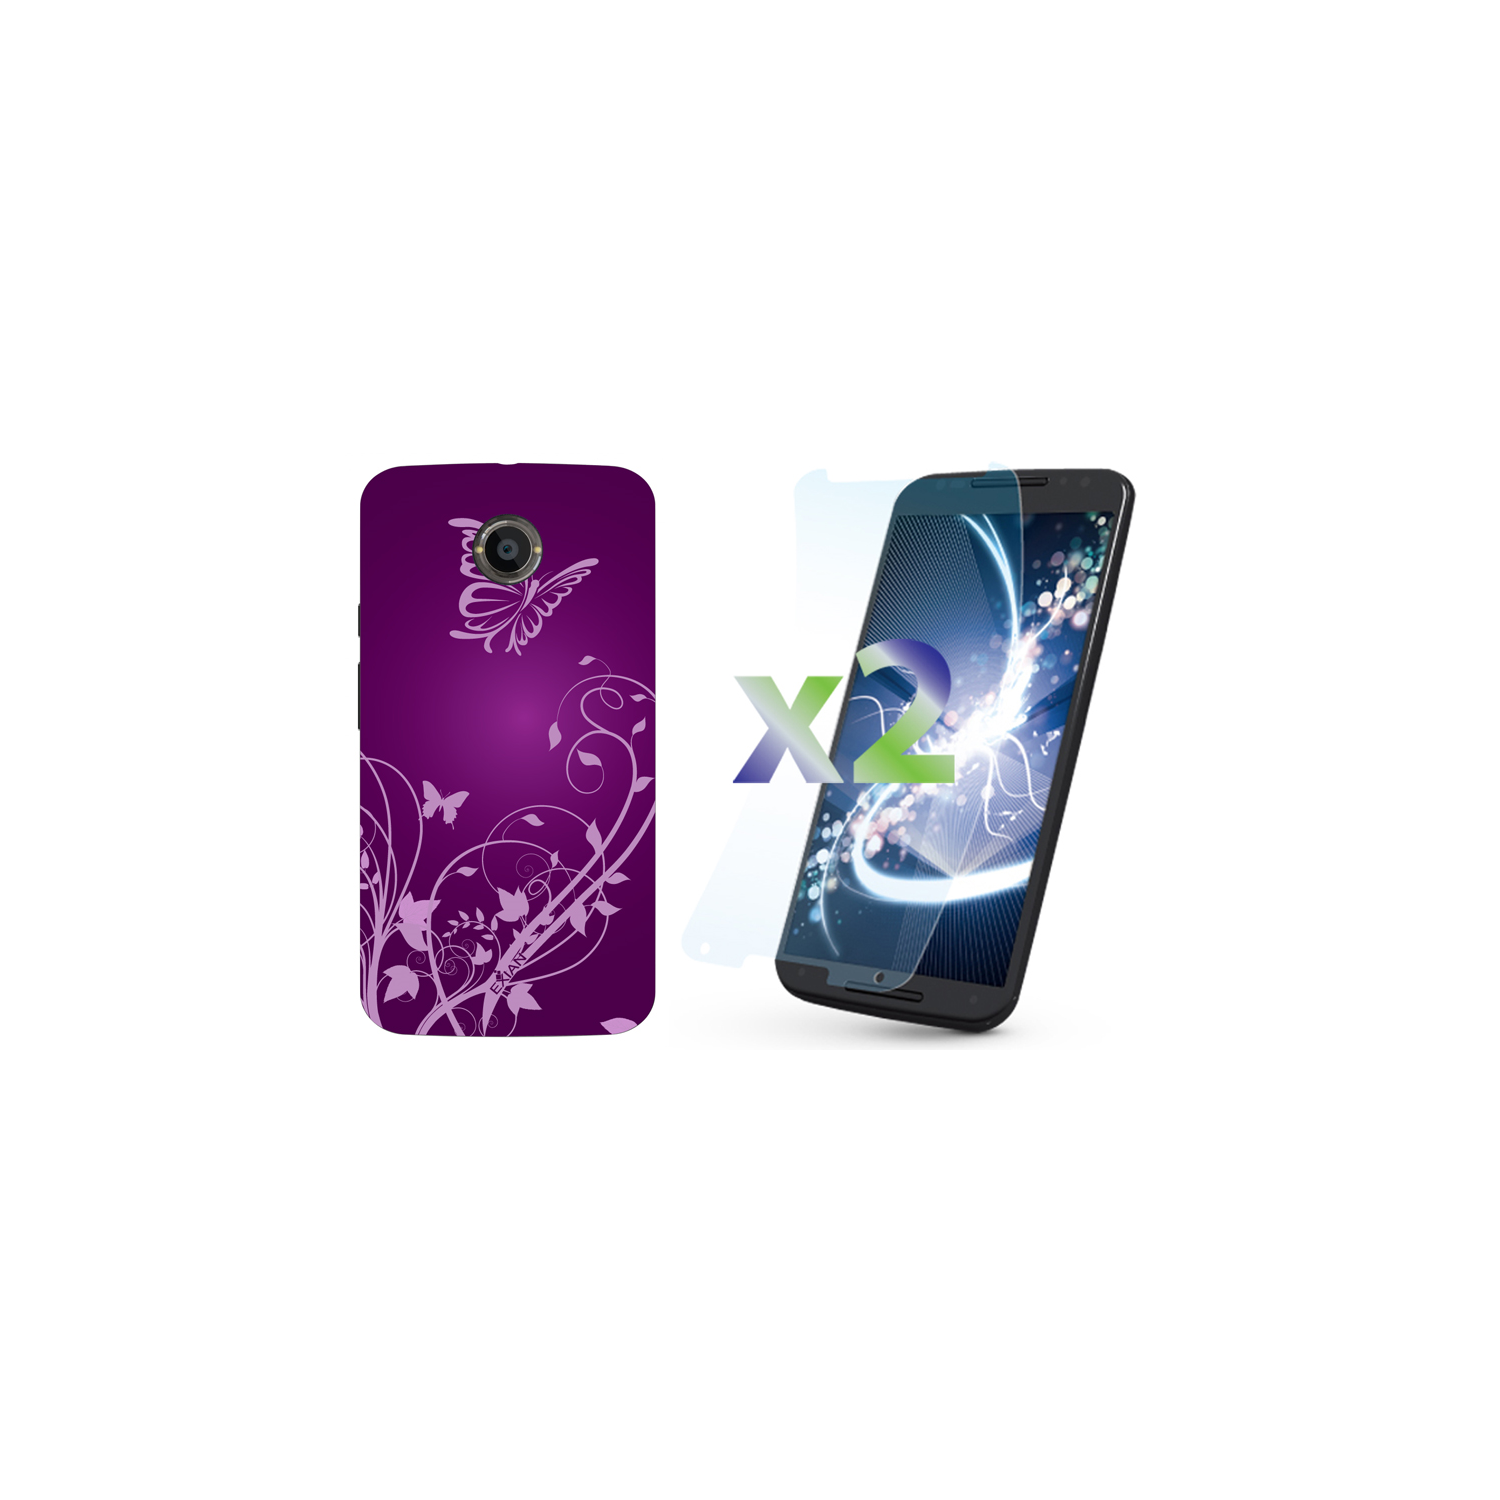 Exian Motorola Moto X2(2nd Gen) Screen Protectors X 2 and TPU Case Exian Design Flower & Butterfly Purple